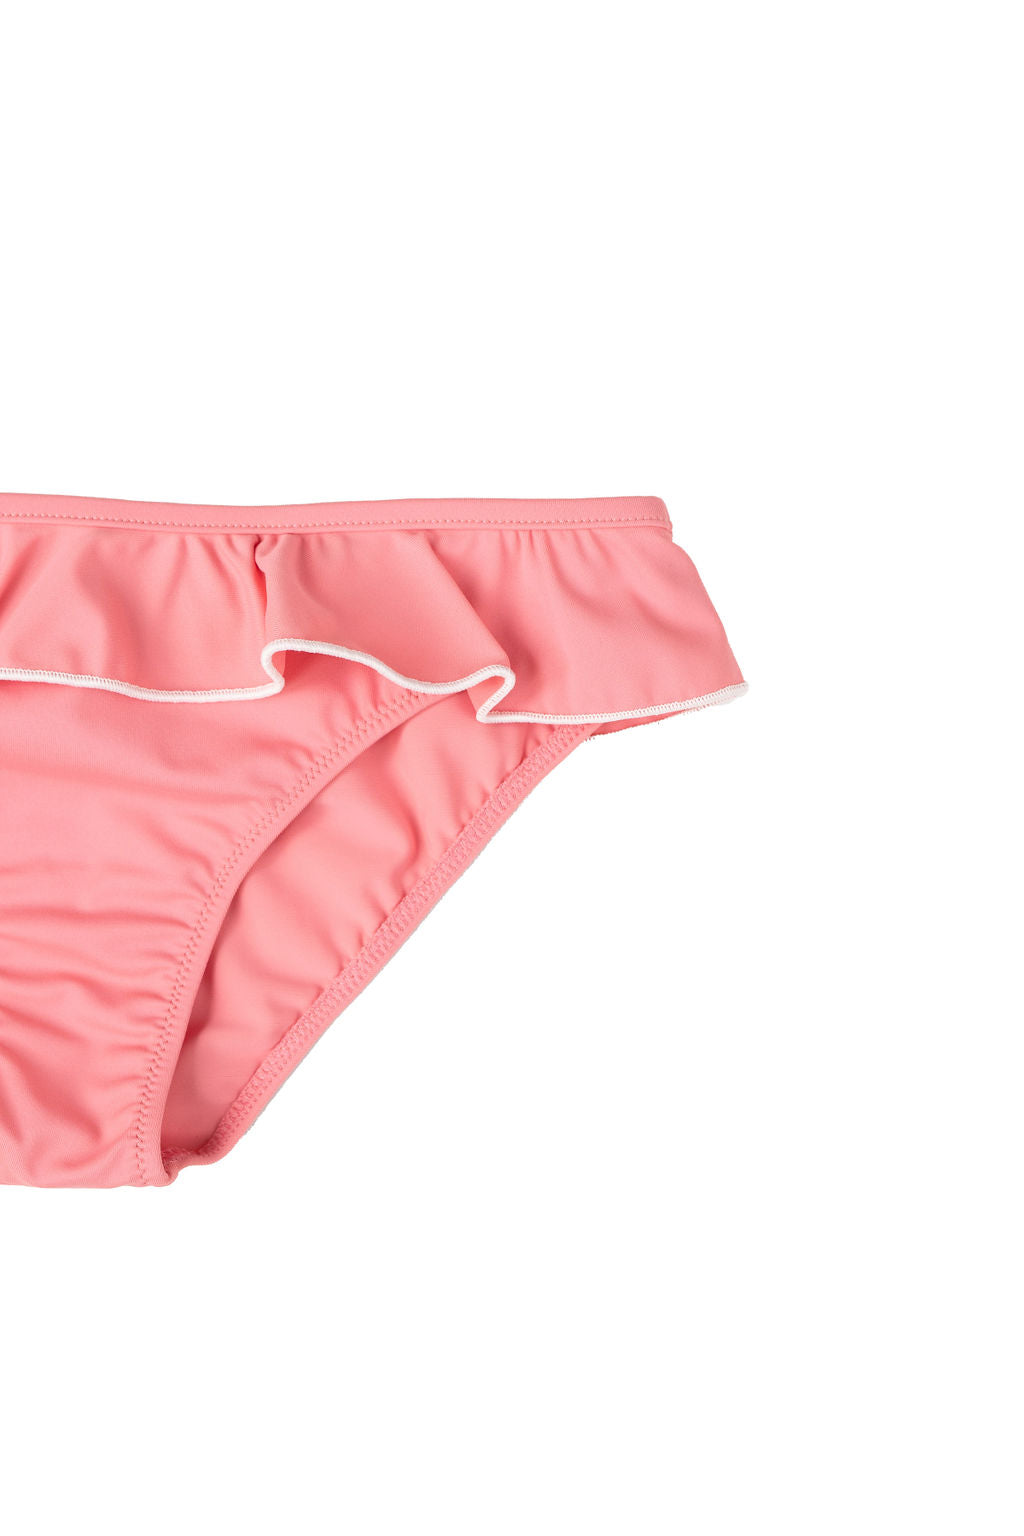 Mimi swimpants in Blush